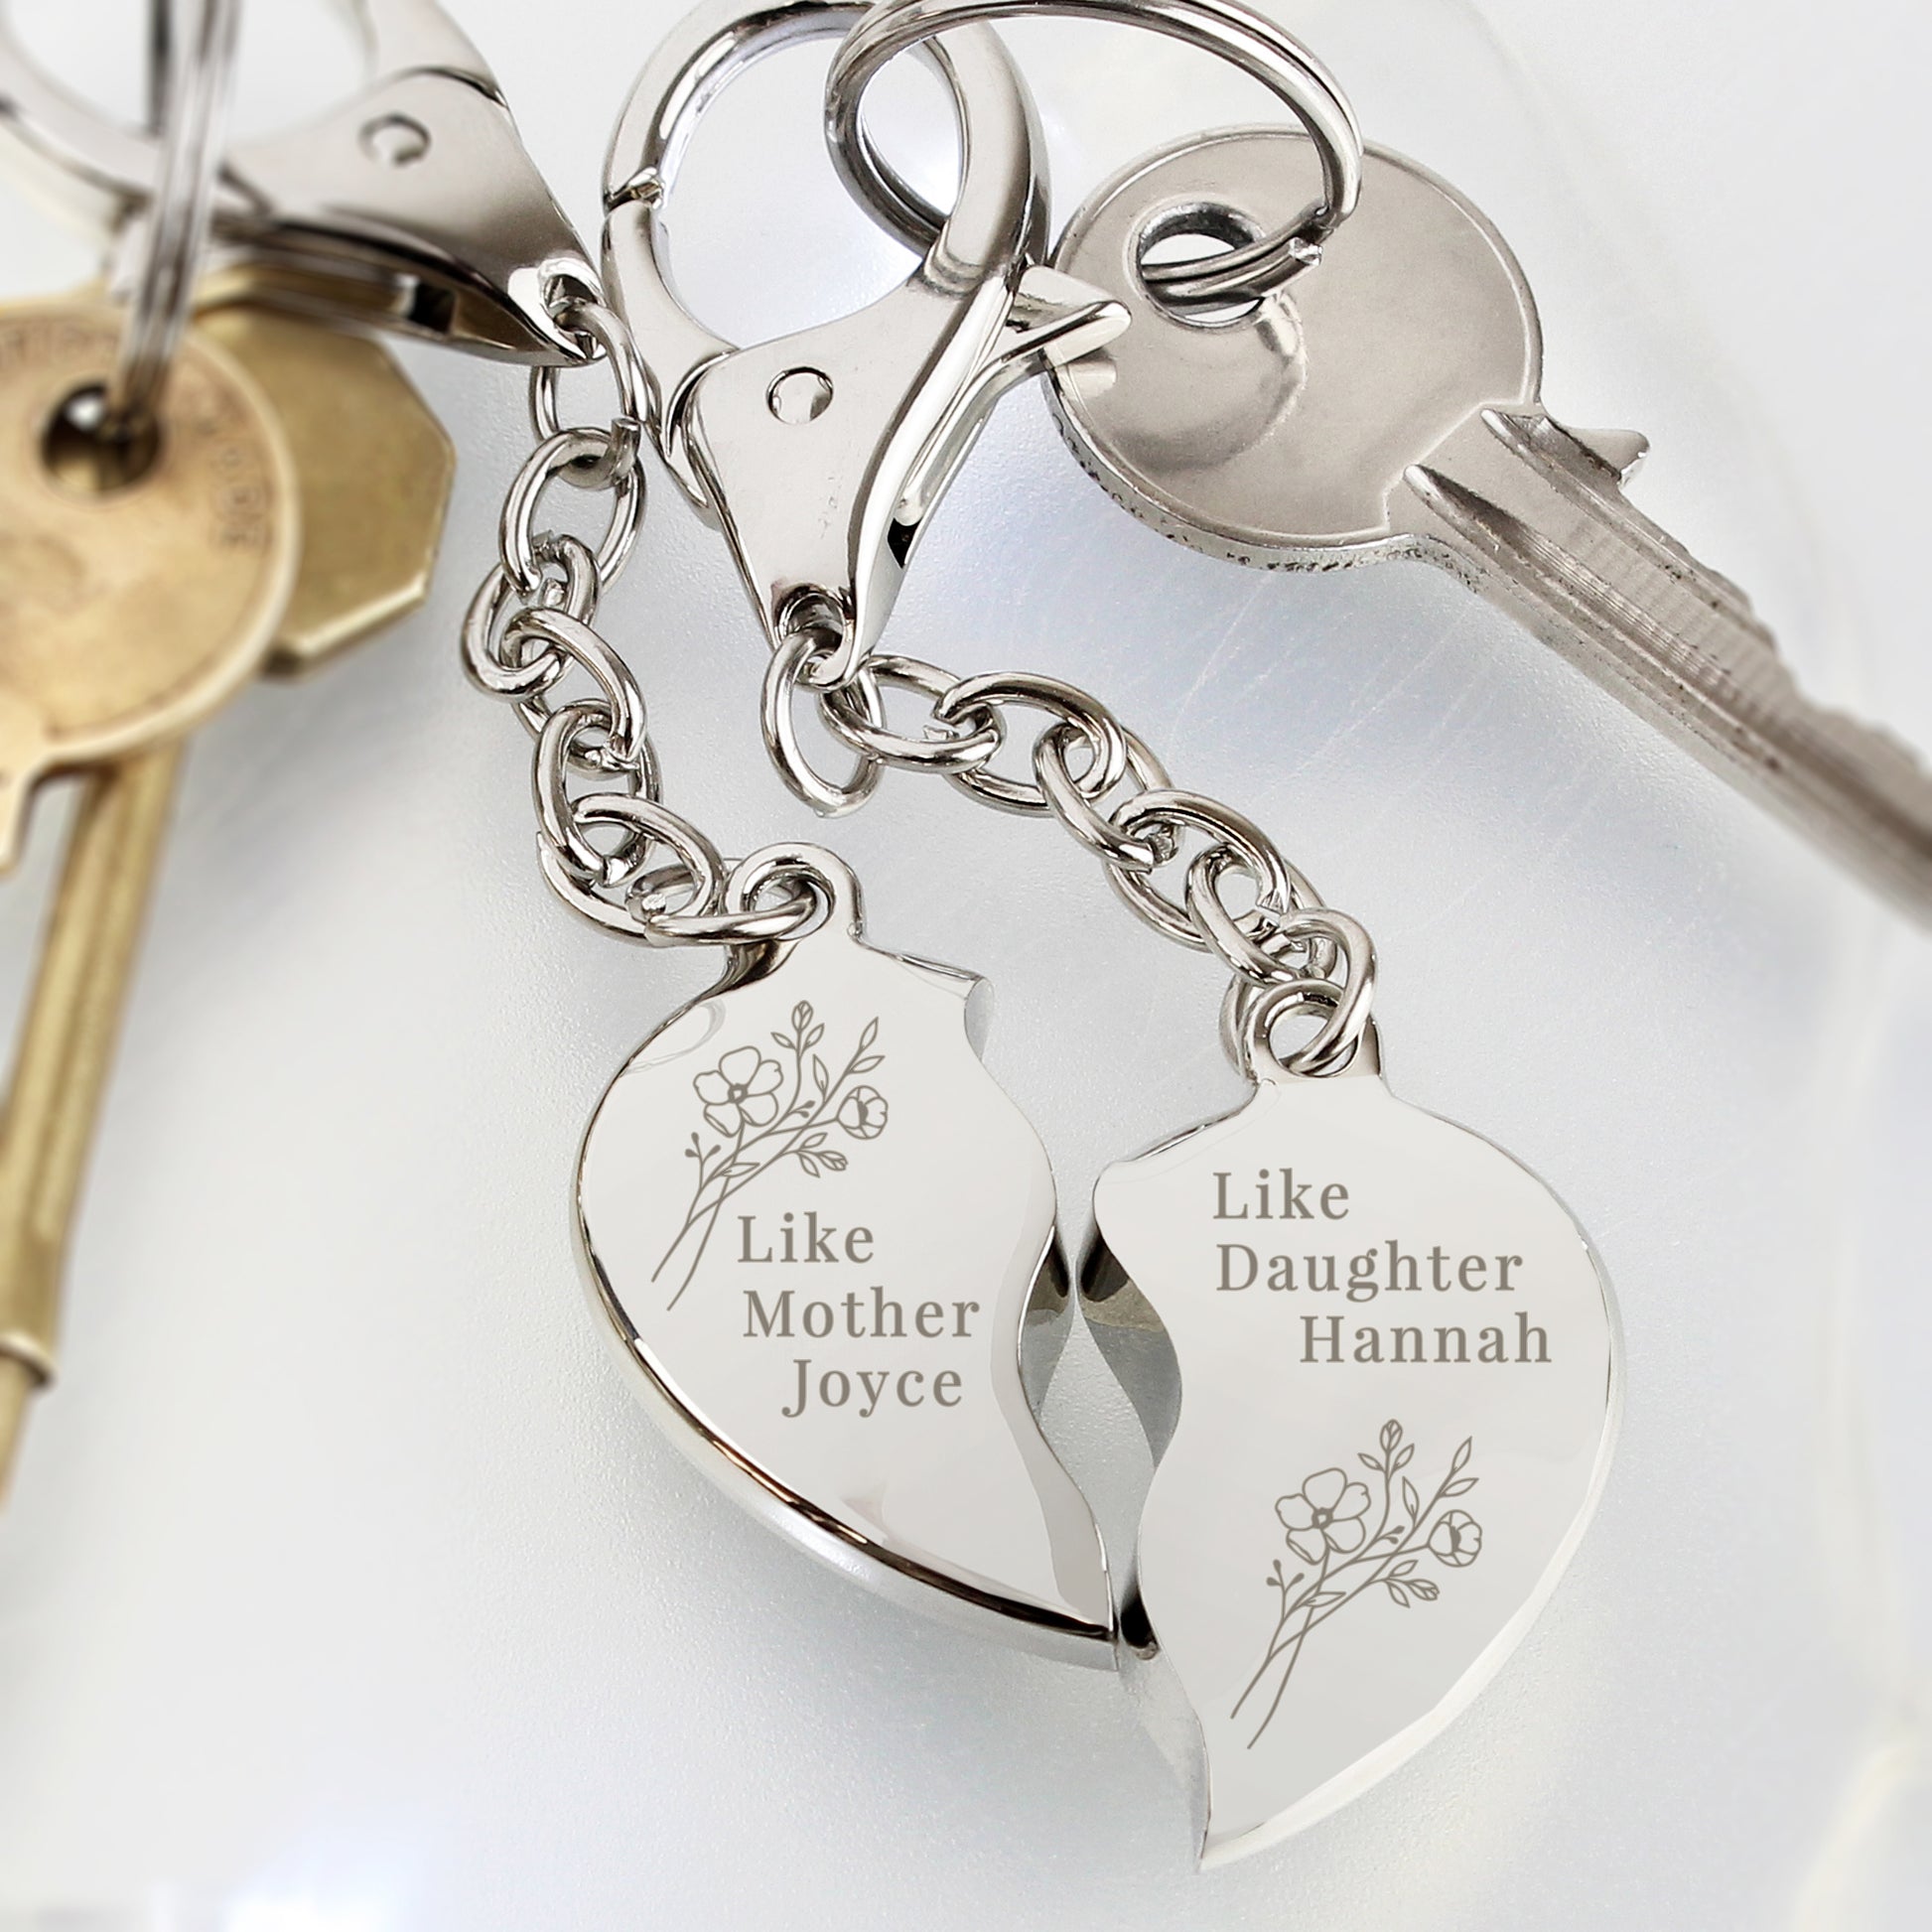 Personalised “Like Mother, Like Daughter” Keyring Set - Violet Belle Gifts - Personalised Mother & Daughter Keychain Set